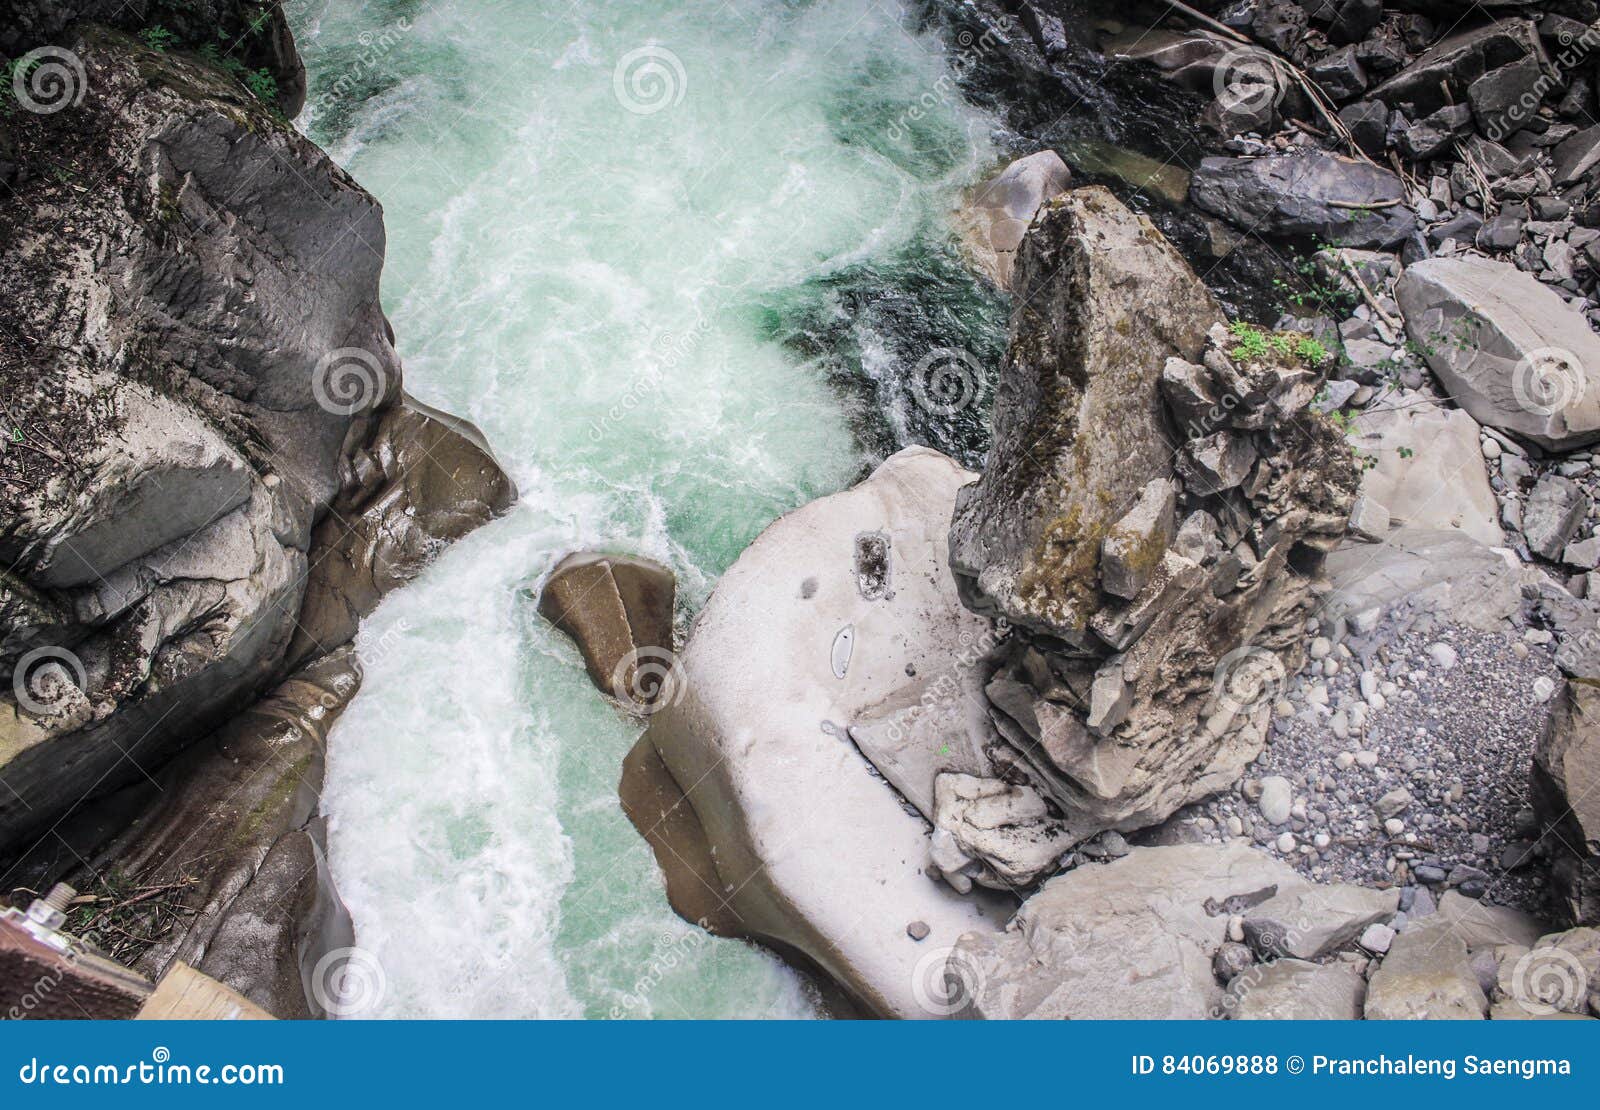 margen blik Laboratorium Powerful Waterfall Stream Top View Stock Photo - Image of fall,  environment: 84069888